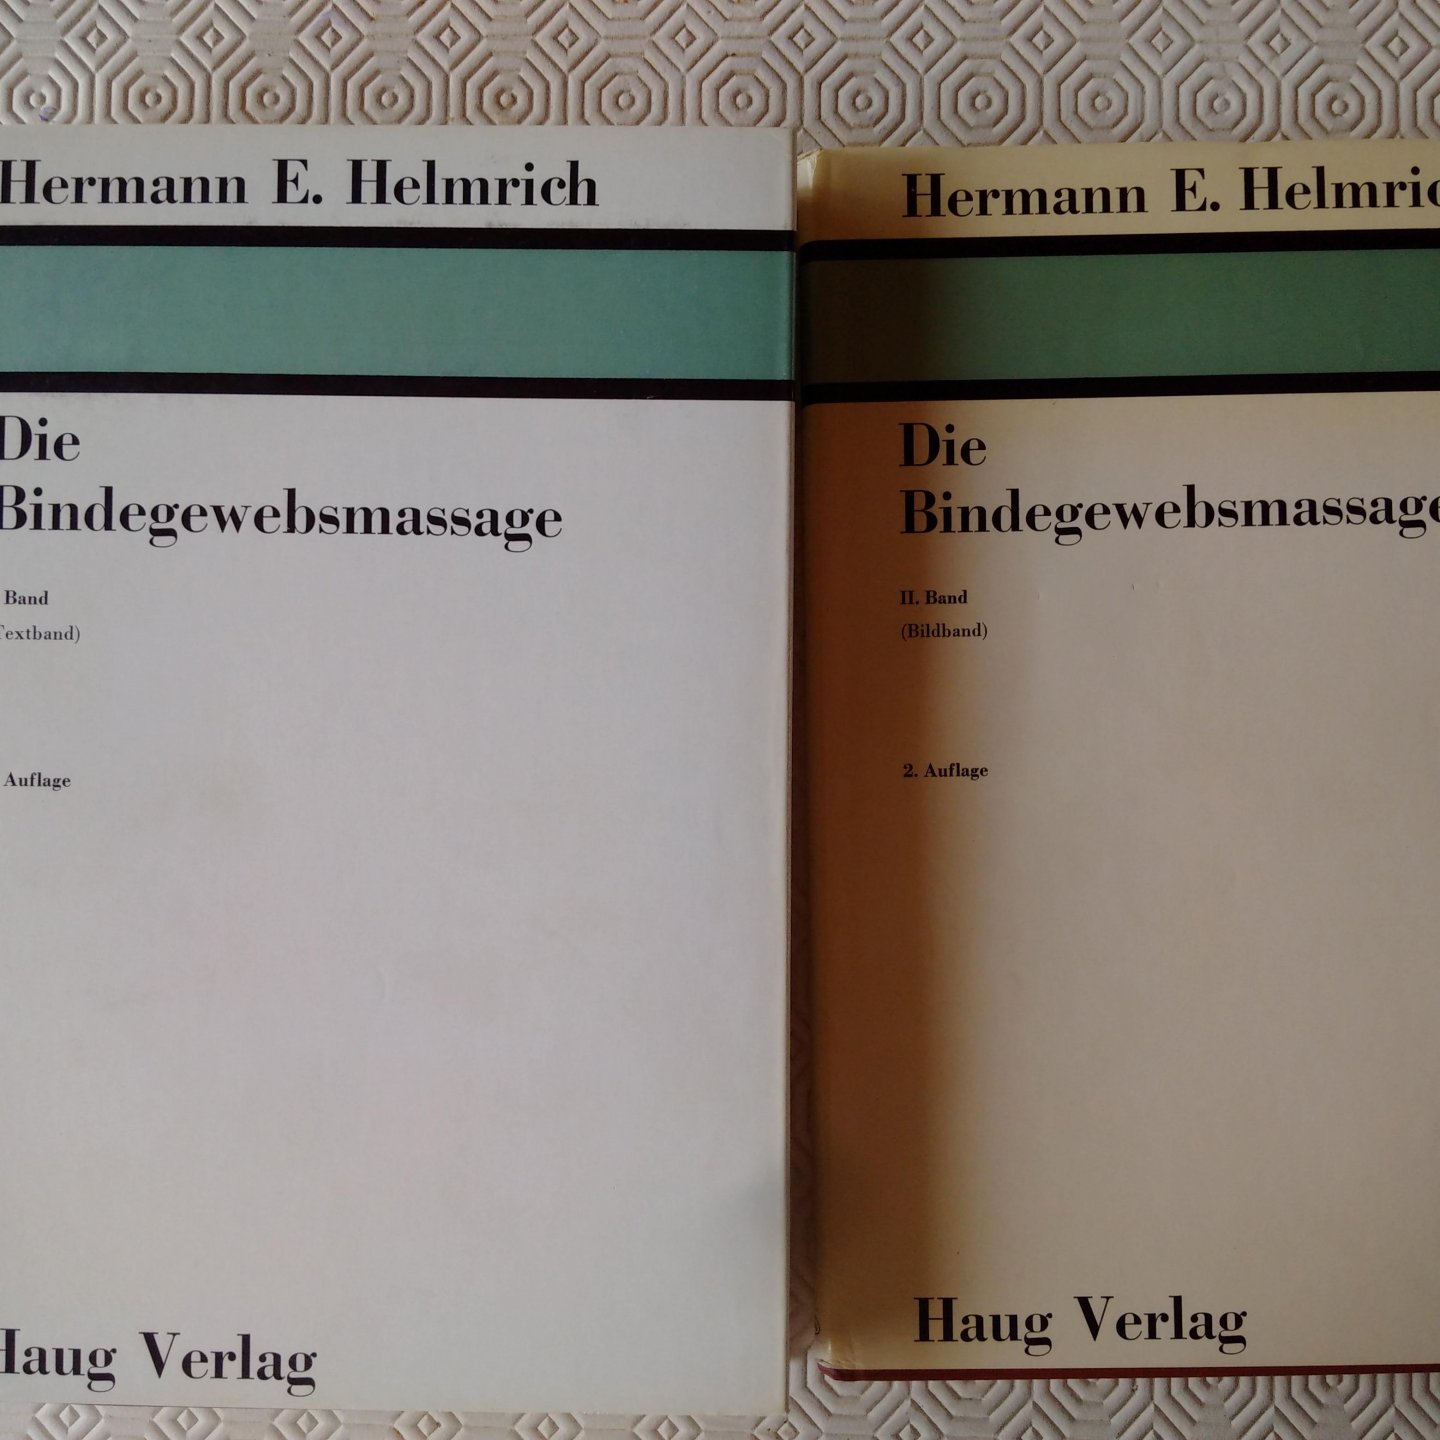 Helmrich, Hermann E. - Die Bindegewebsmassage deel 1 en 2